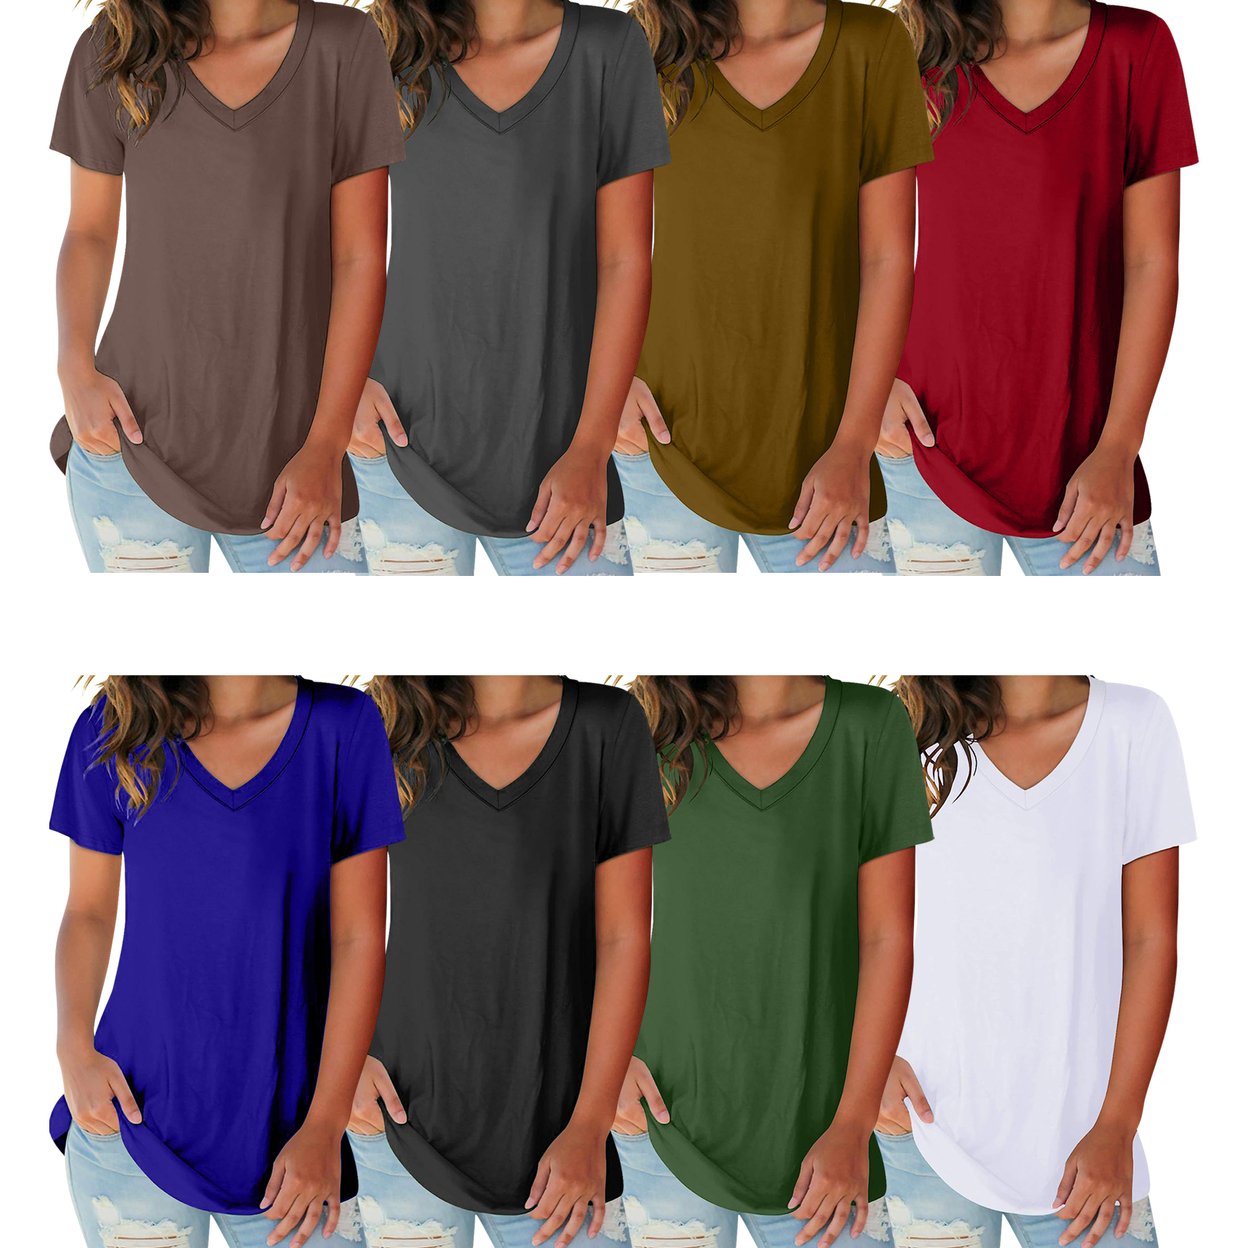 5-Pack: Women's Ultra Soft Smooth Cotton Blend Basic V-Neck Short Sleeve Shirts - Small